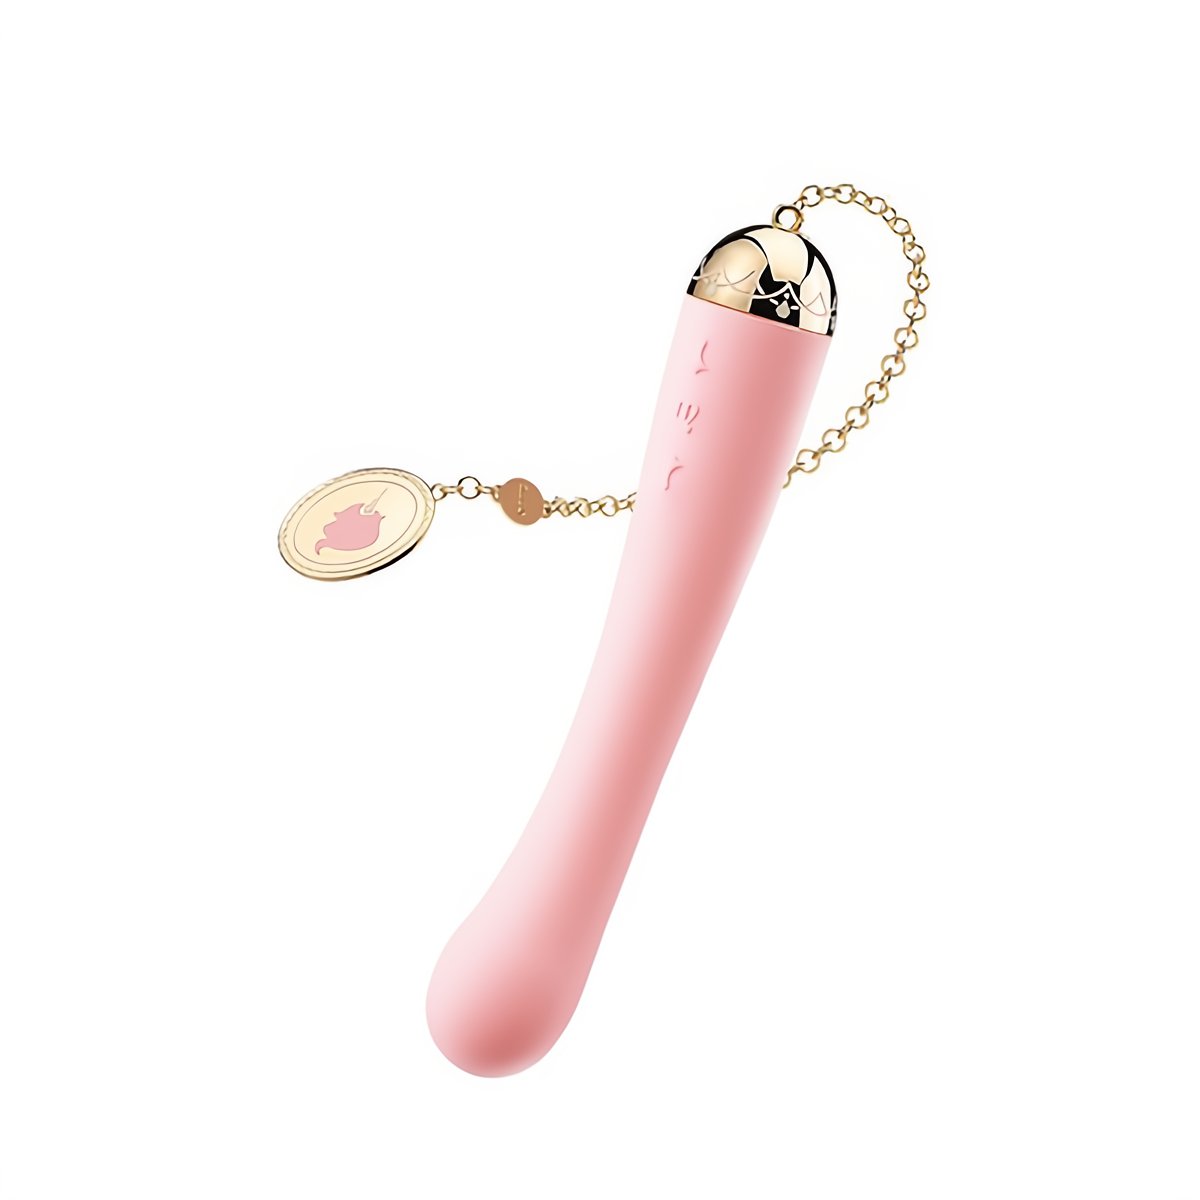 Momoko strawberry pink - EroticToyzProducten,Toys,Vibrators,G - Spot Vibrator,,GeslachtsneutraalZalo